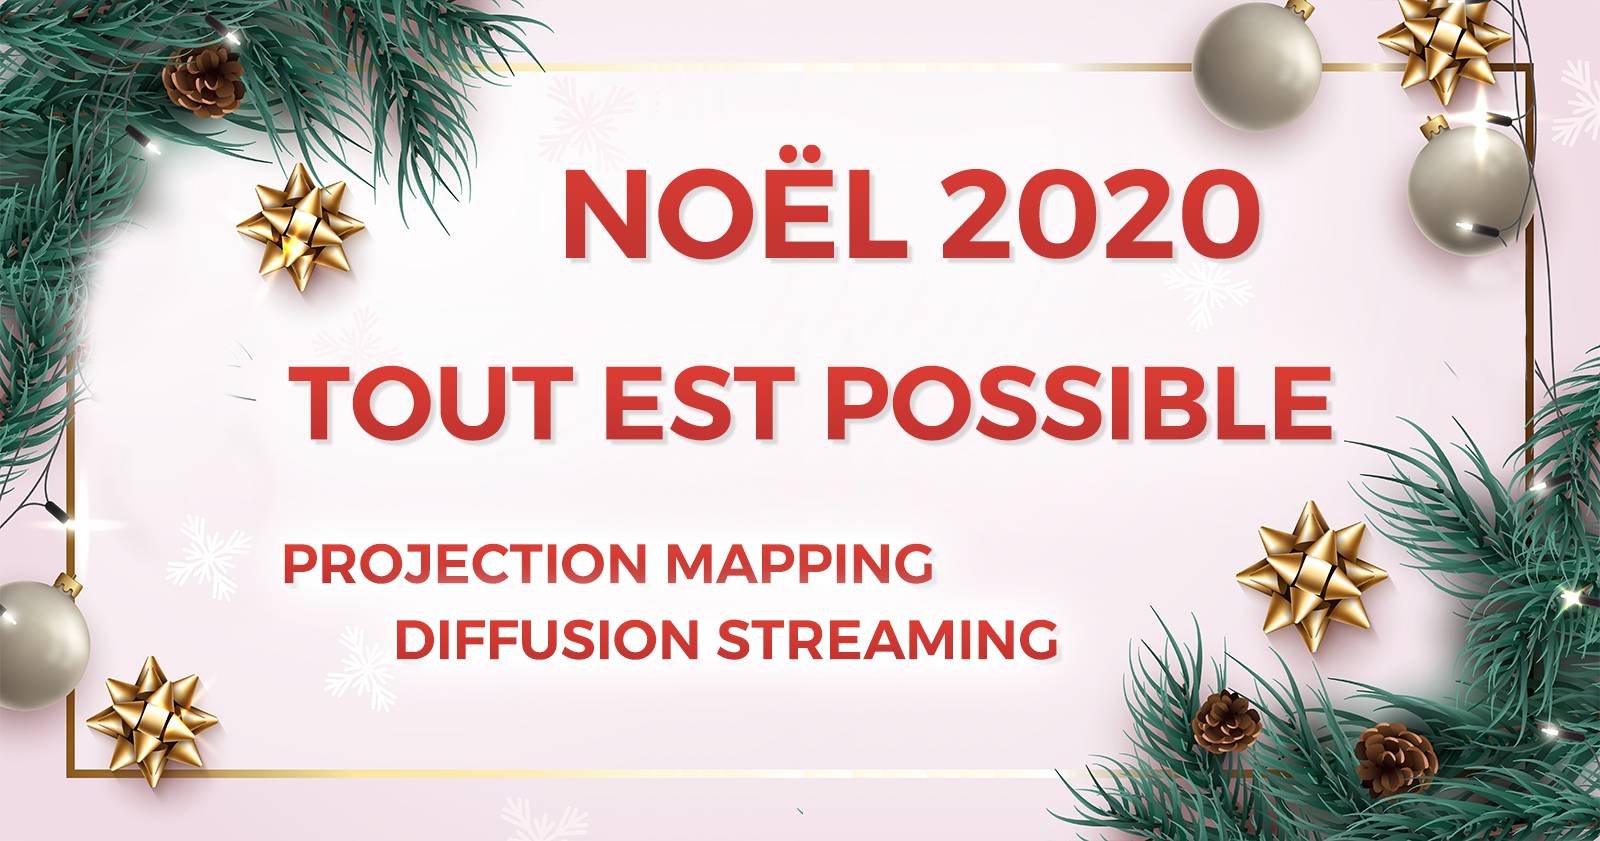 noel 2020 arbre de noel en France